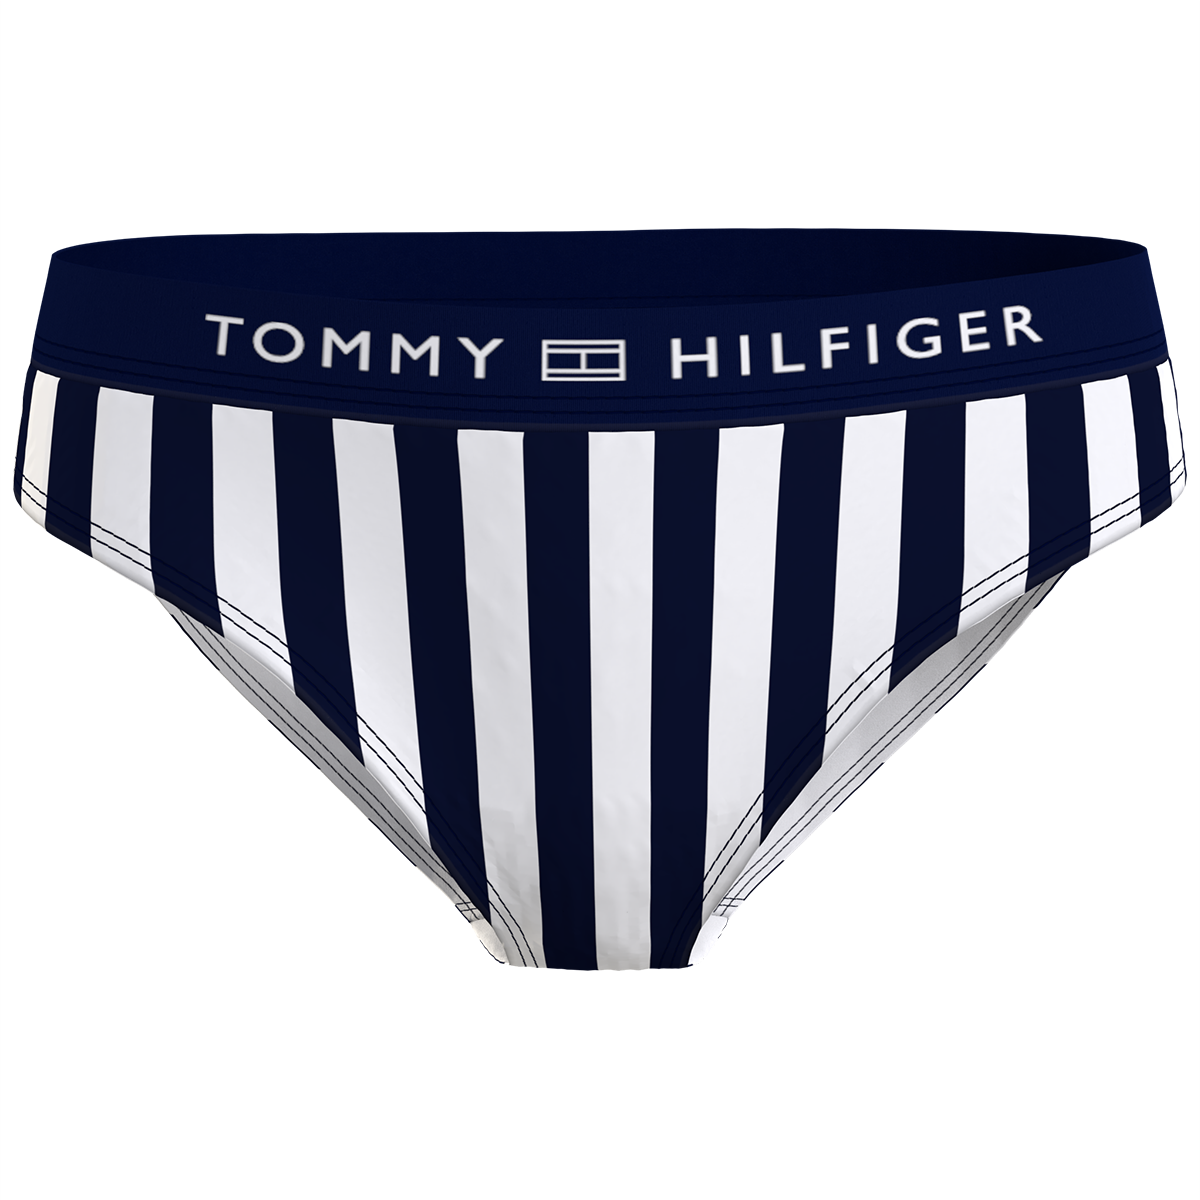 Tommy Hilfiger Lingeri Bikini Tai W U, Farve: Sort/Hvid, Størrelse: S, Dame